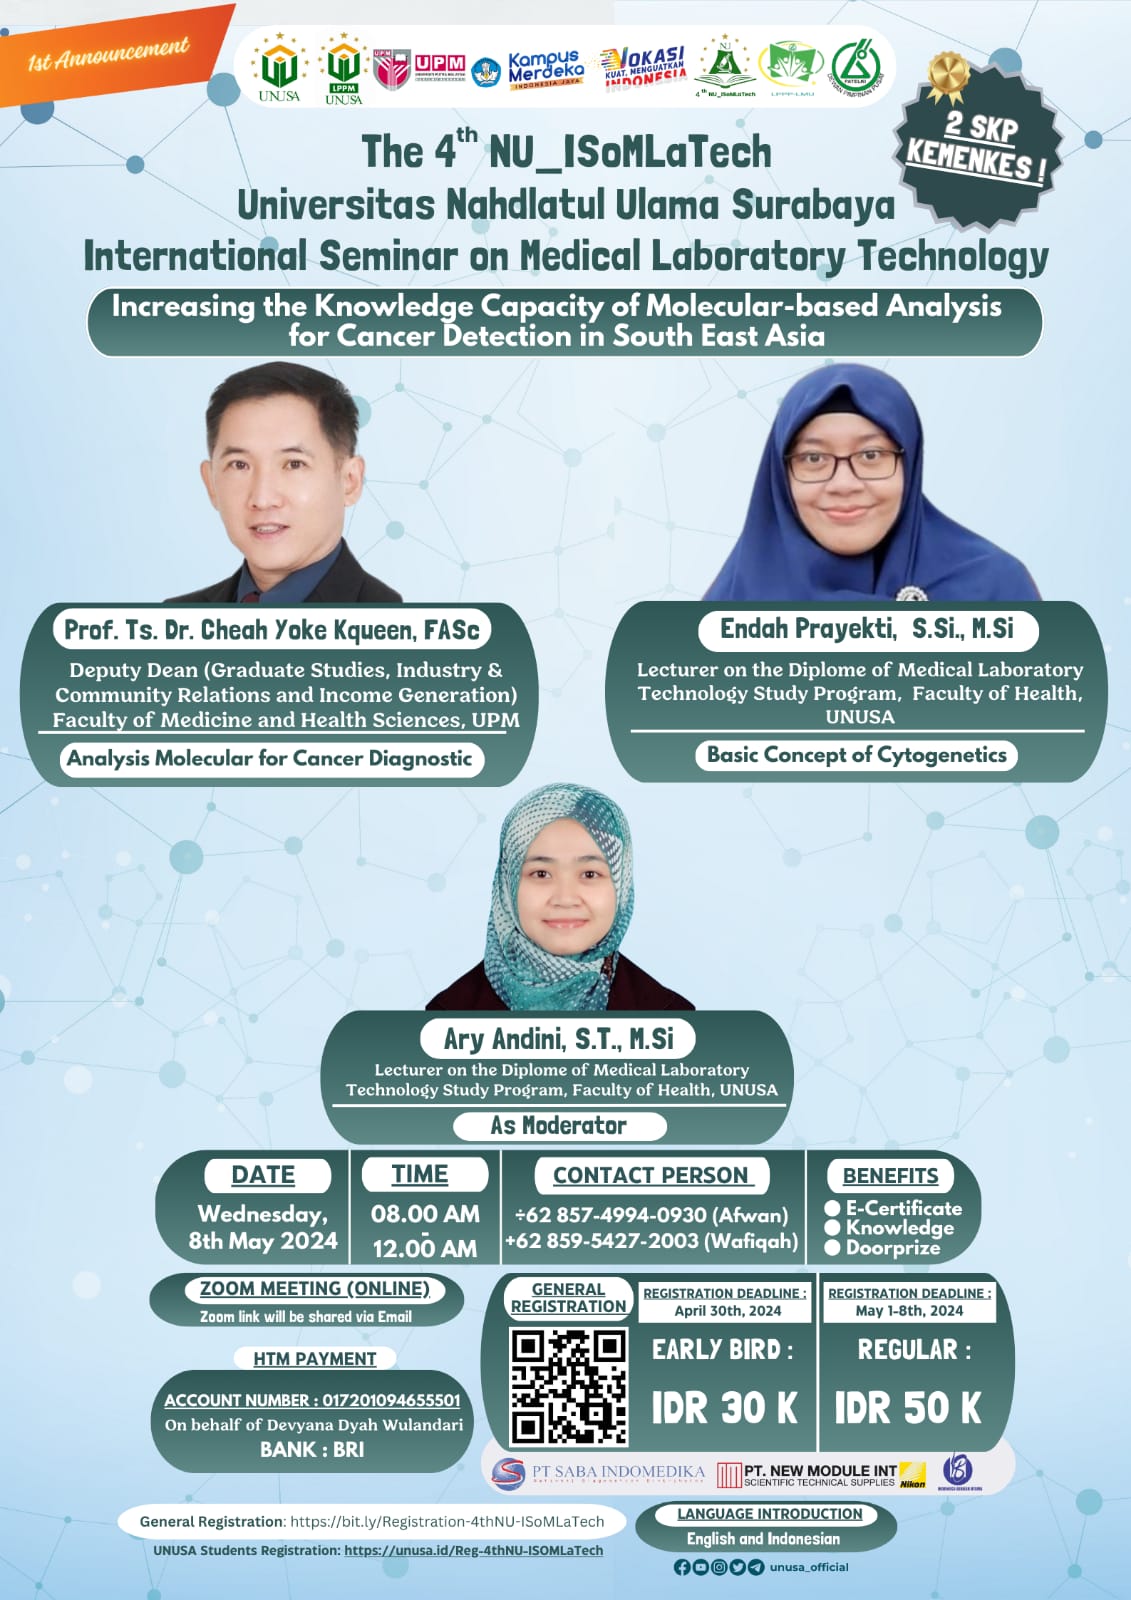 THE 4th INTERNATIONAL SEMINAR ON MEDICAL LABORATORY TECHNOLOGY